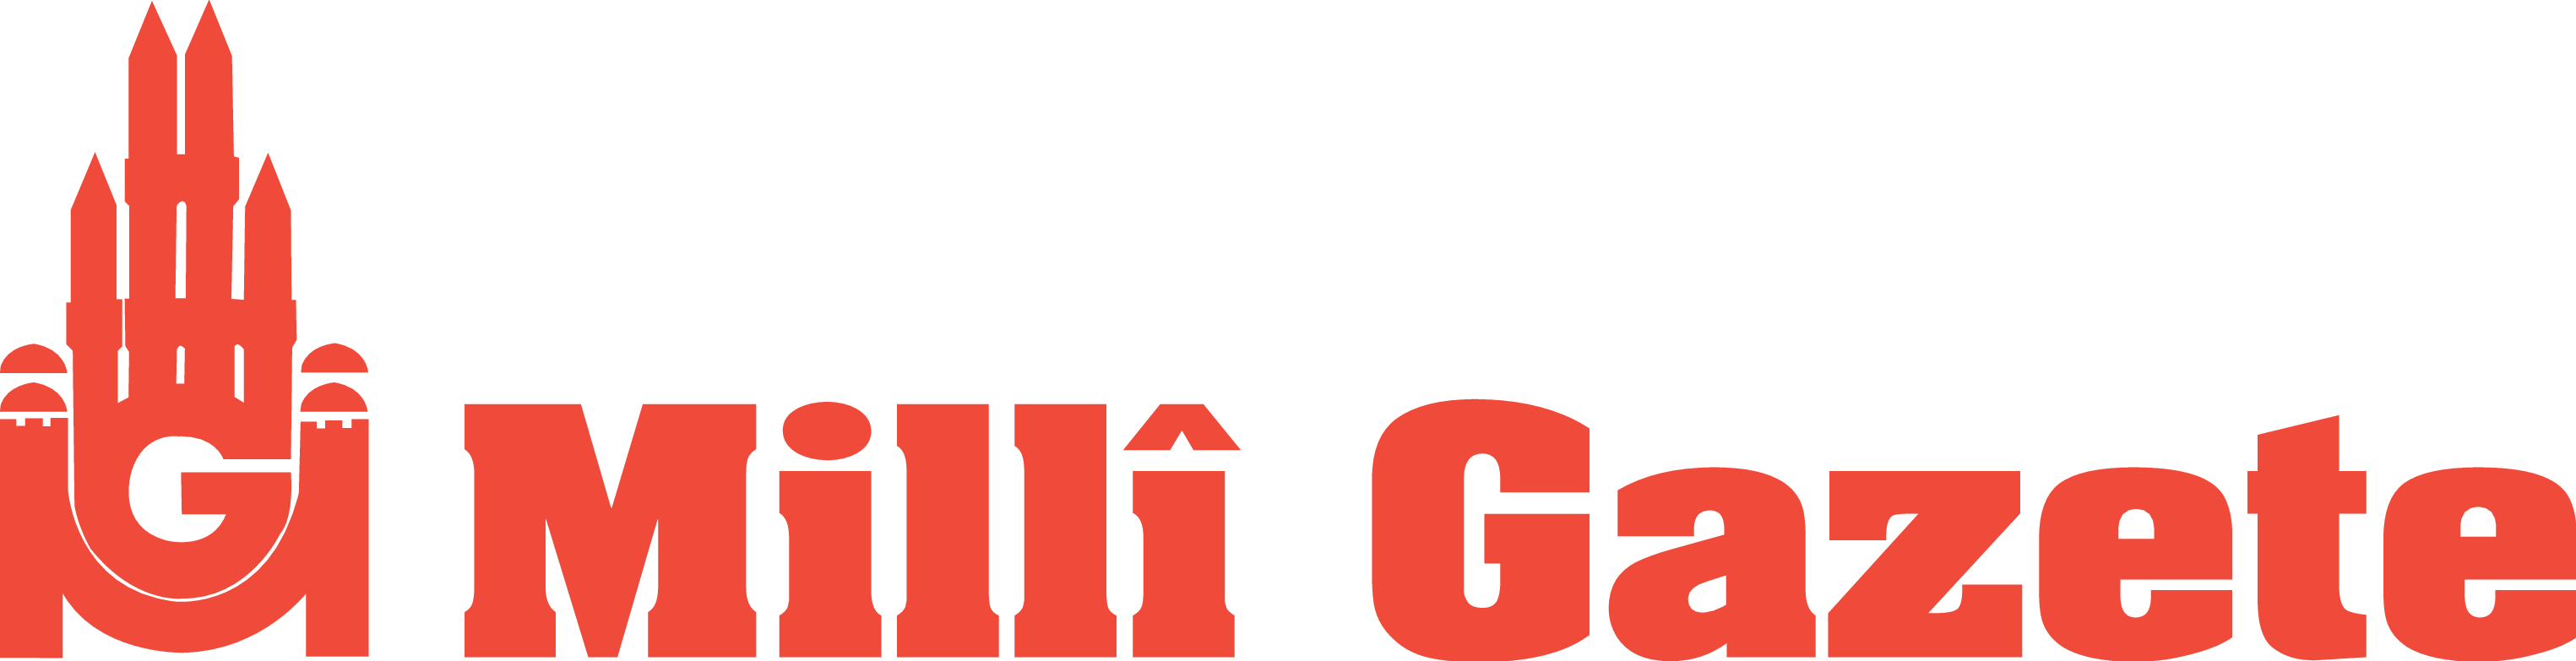 milli gazete Logo